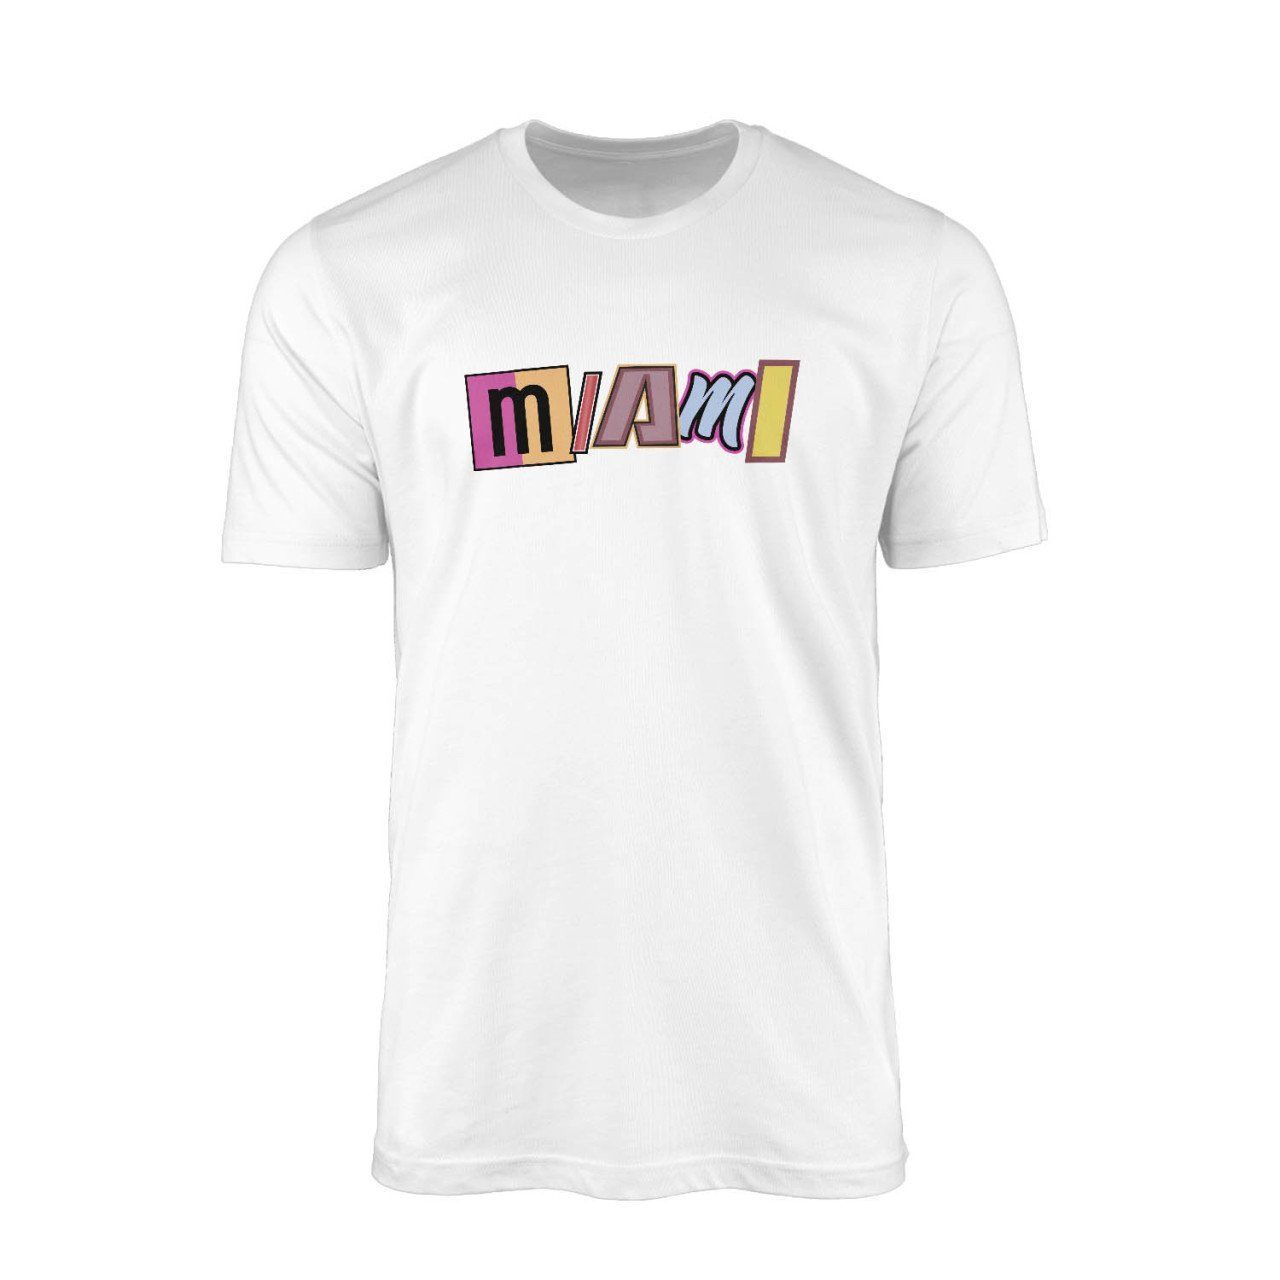 Miami All in Design Beyaz Tshirt